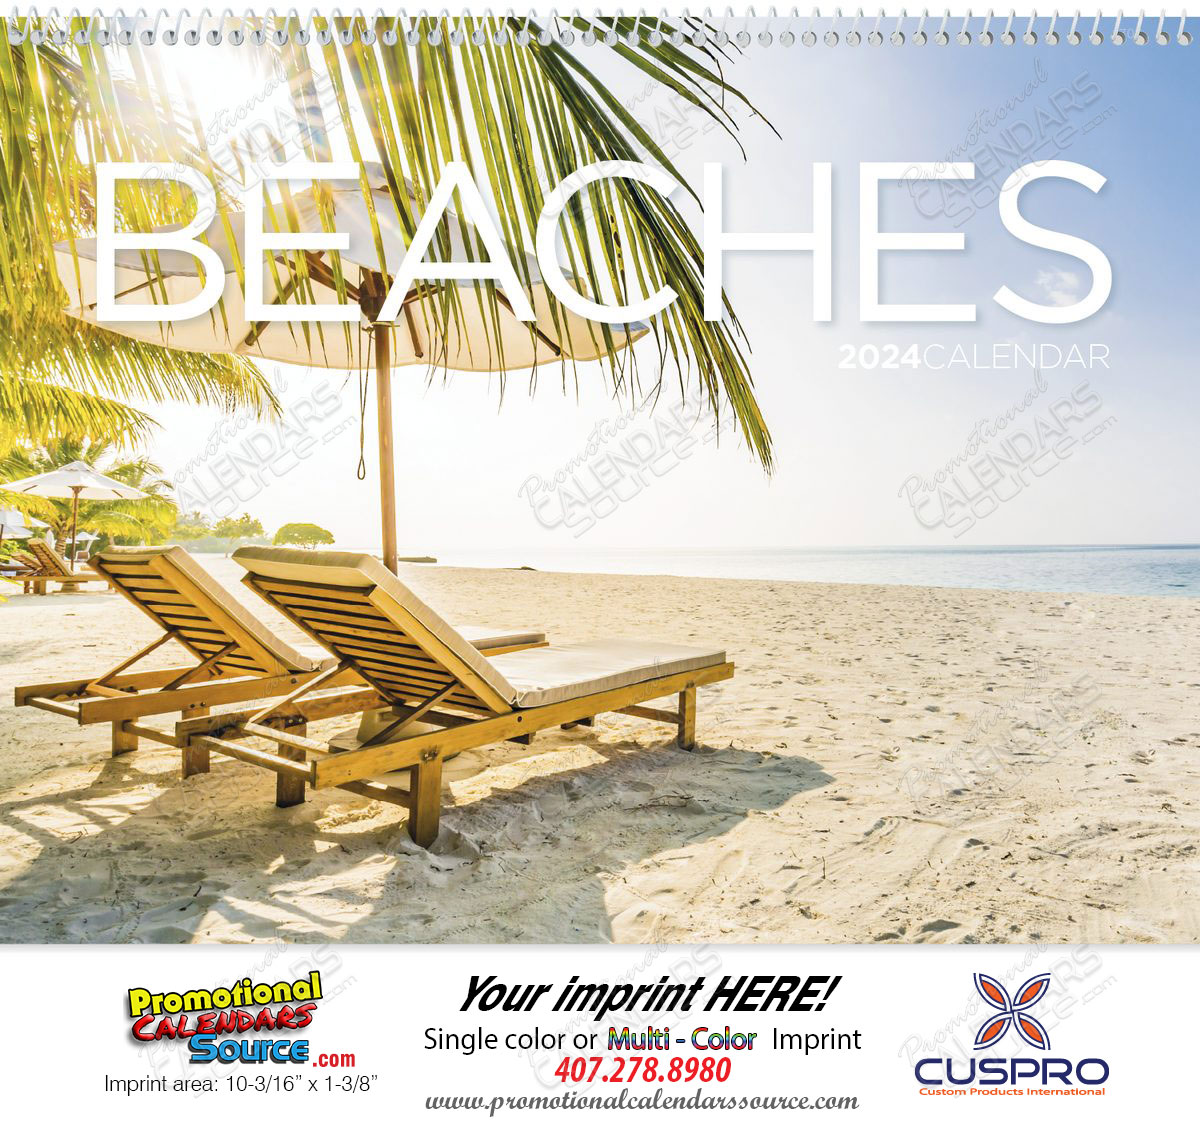 Beaches Promotional Calendar 